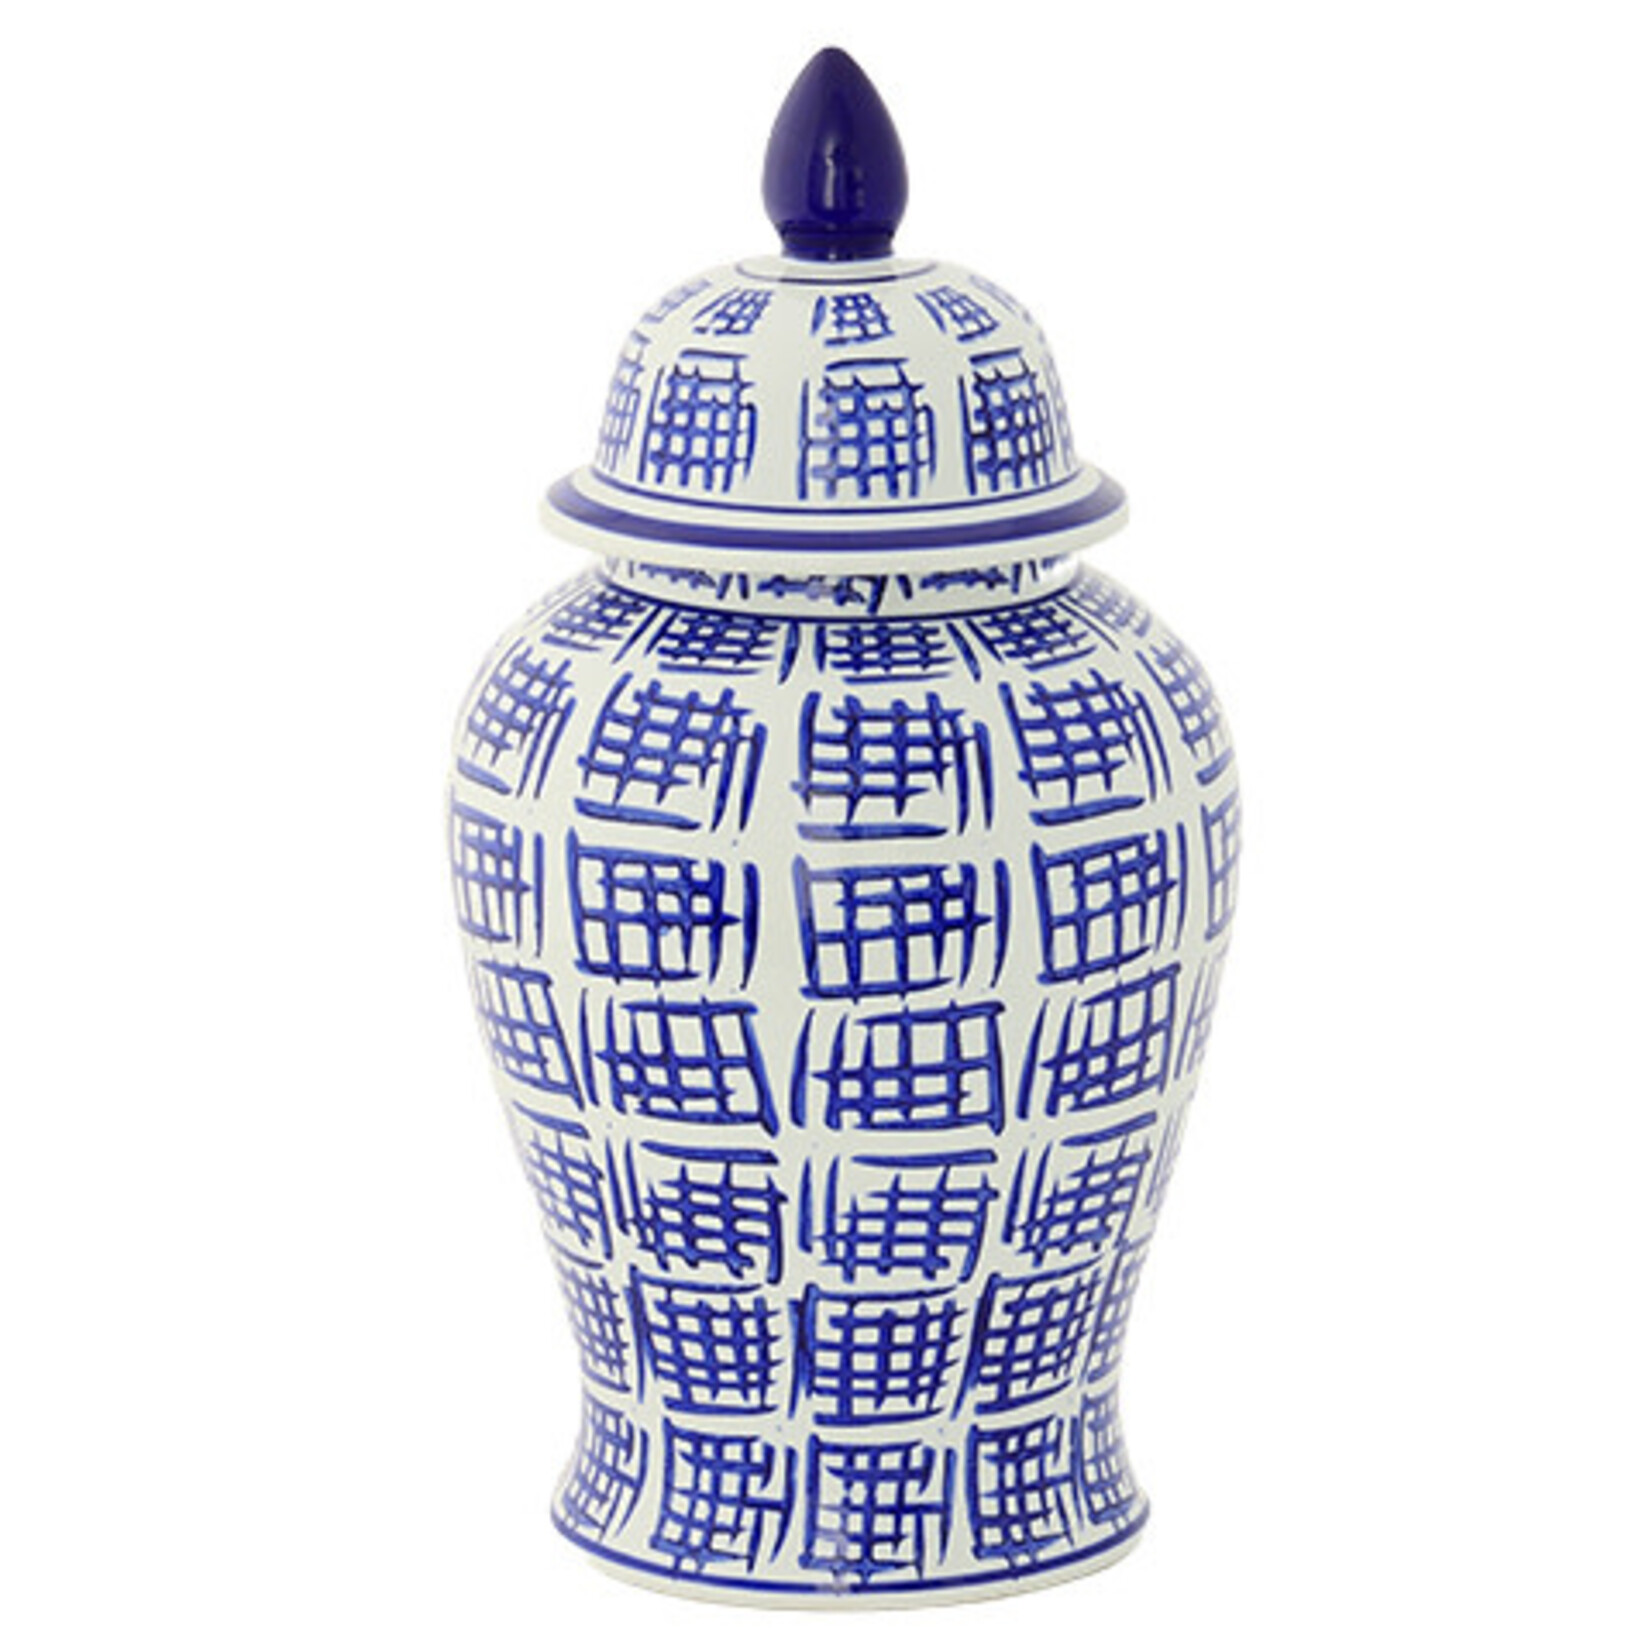 18” x 9.5” Ceramic Chinoiserie Ginger/Temple Jar Gloss Blue&White